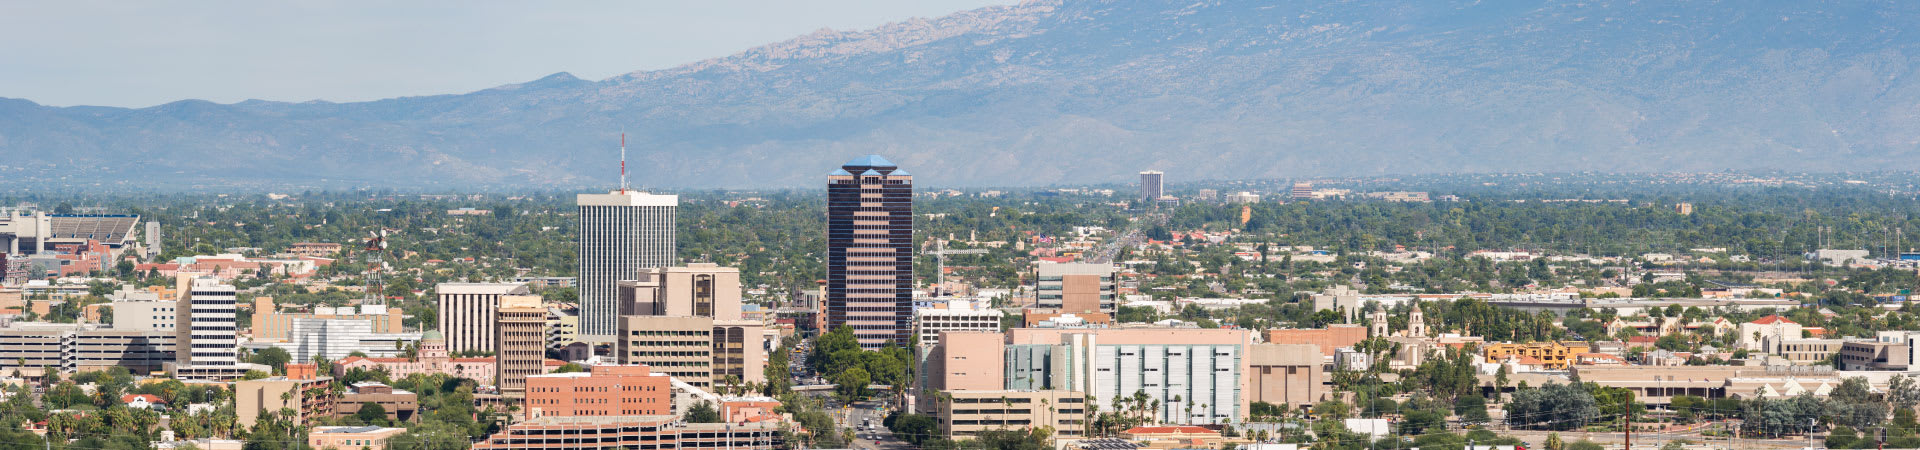 The Tucson, Arizona, skyline during the daytime